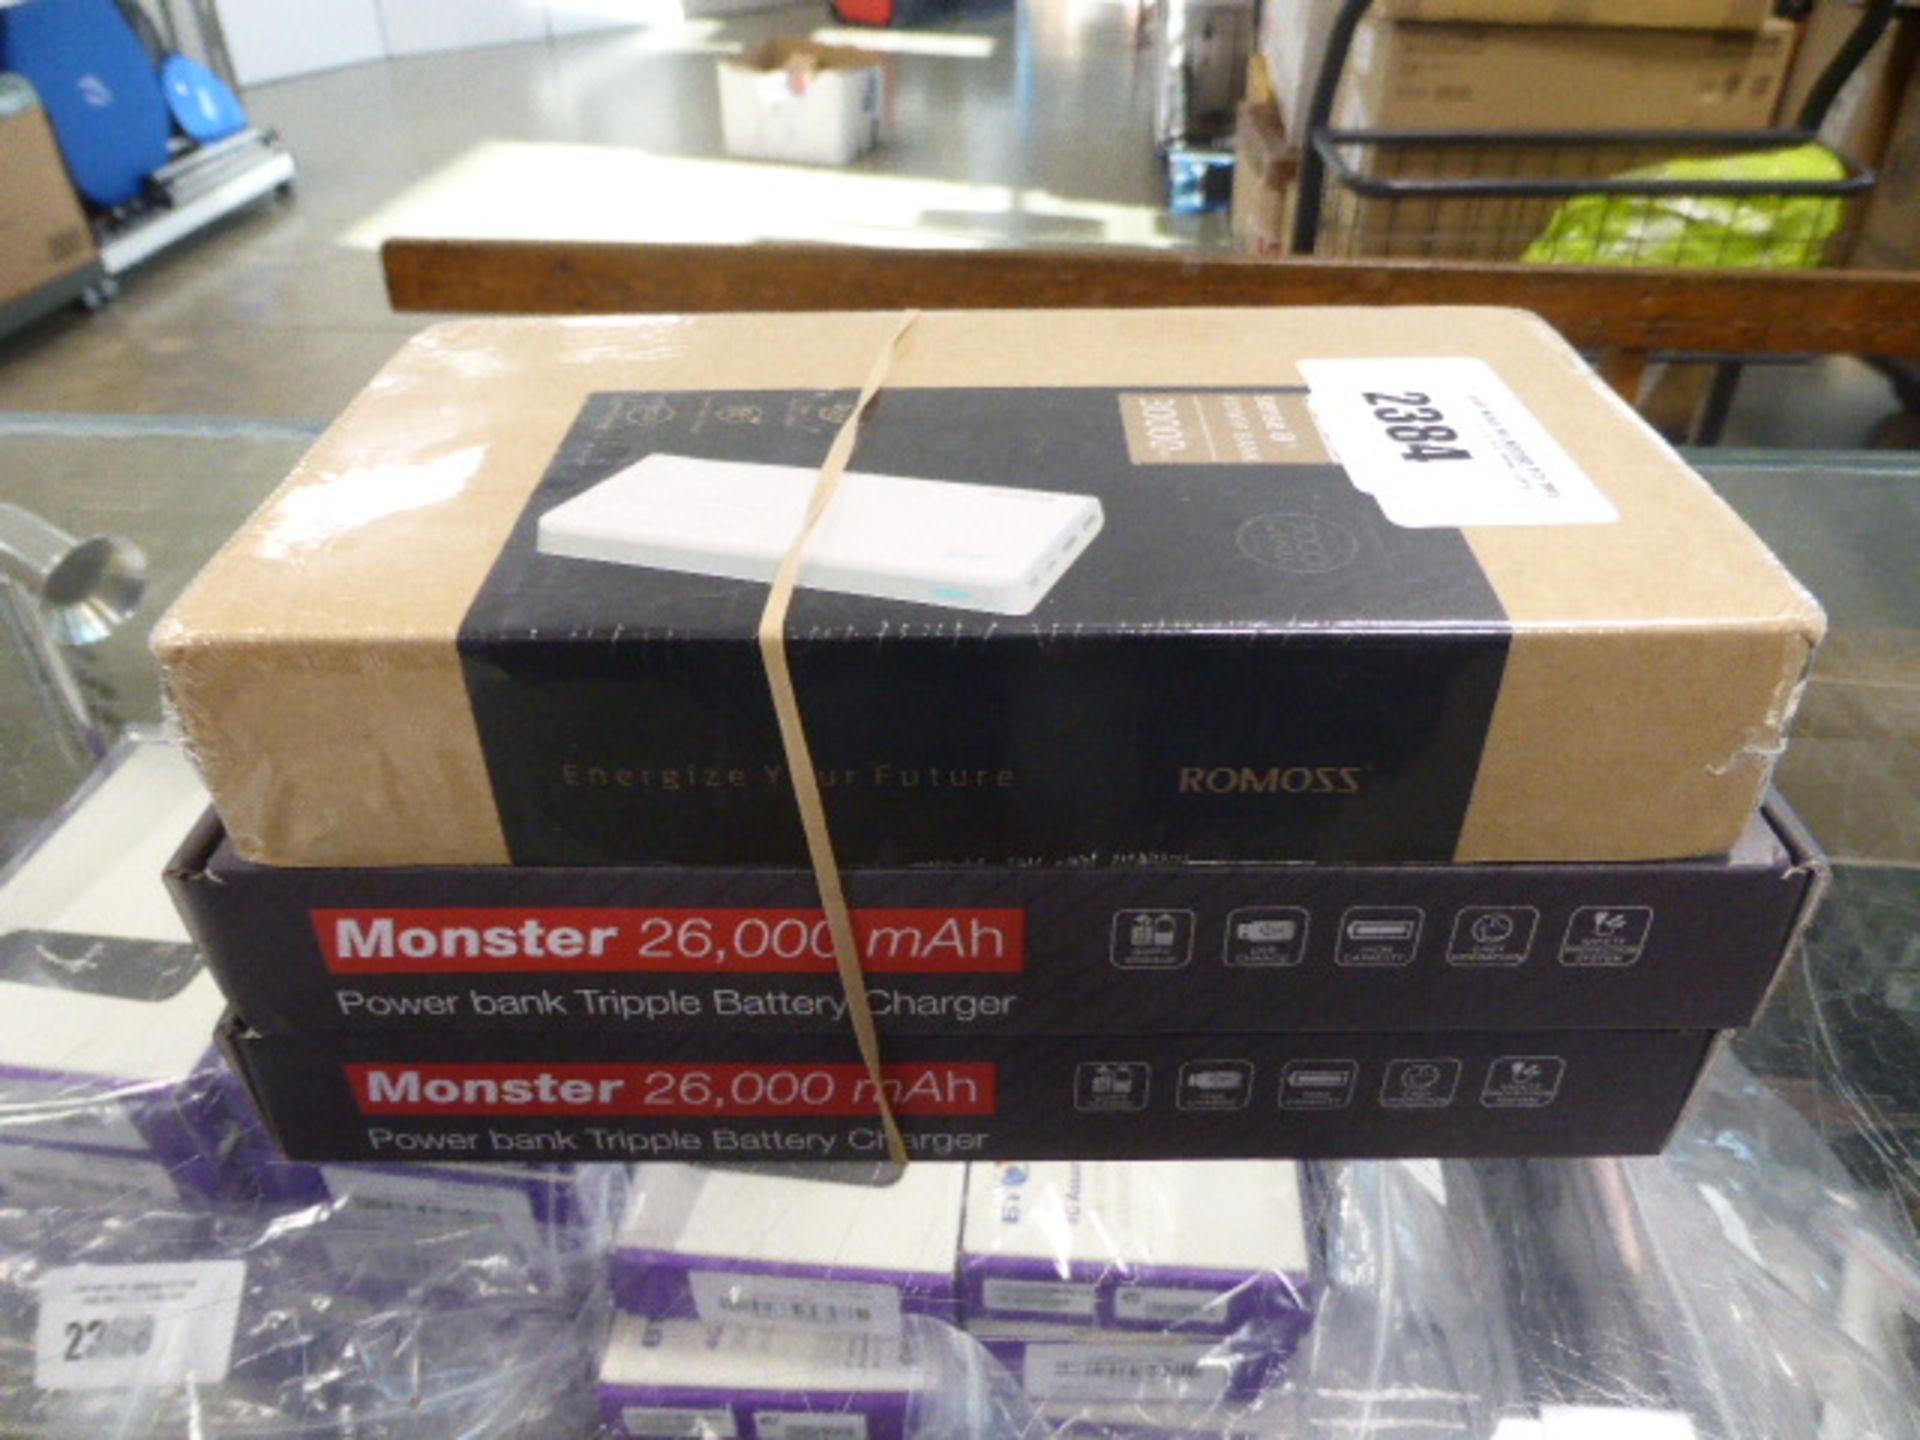 2266 2x Monster 26,000 mAh battery charger and Romoss 30000 mAh power bank